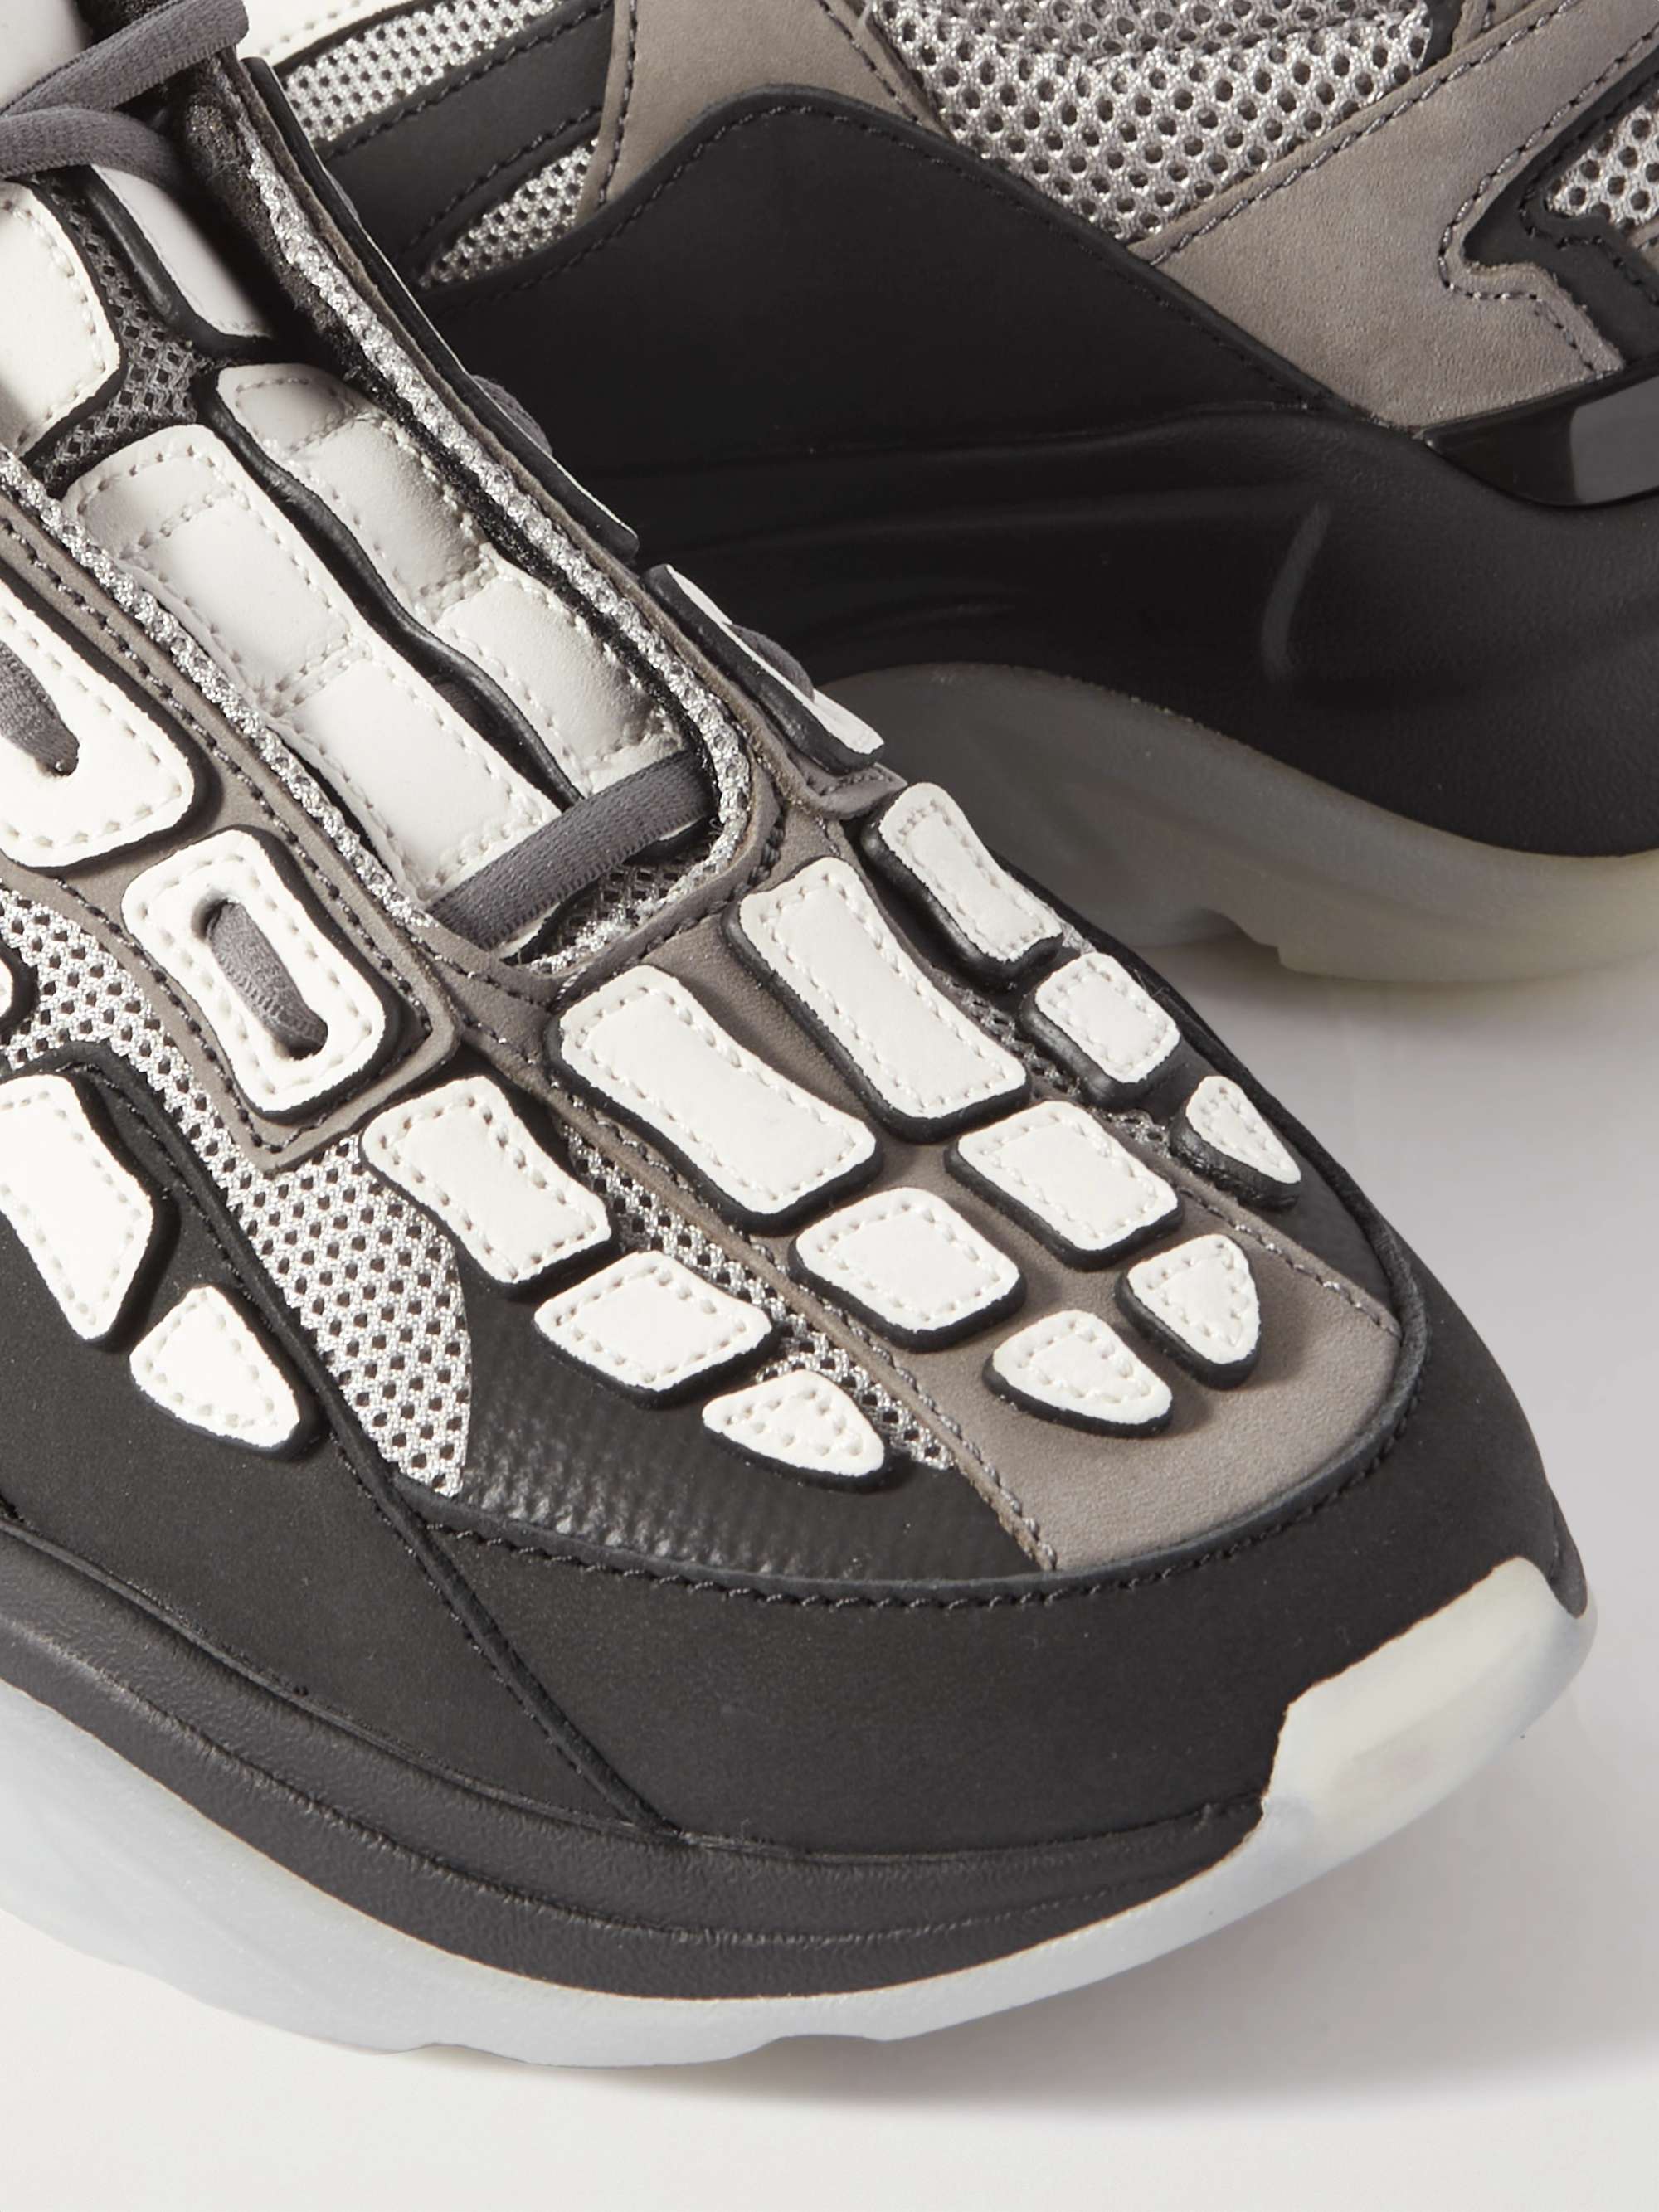 AMIRI Bone Runner Leather, Mesh and Suede Sneakers